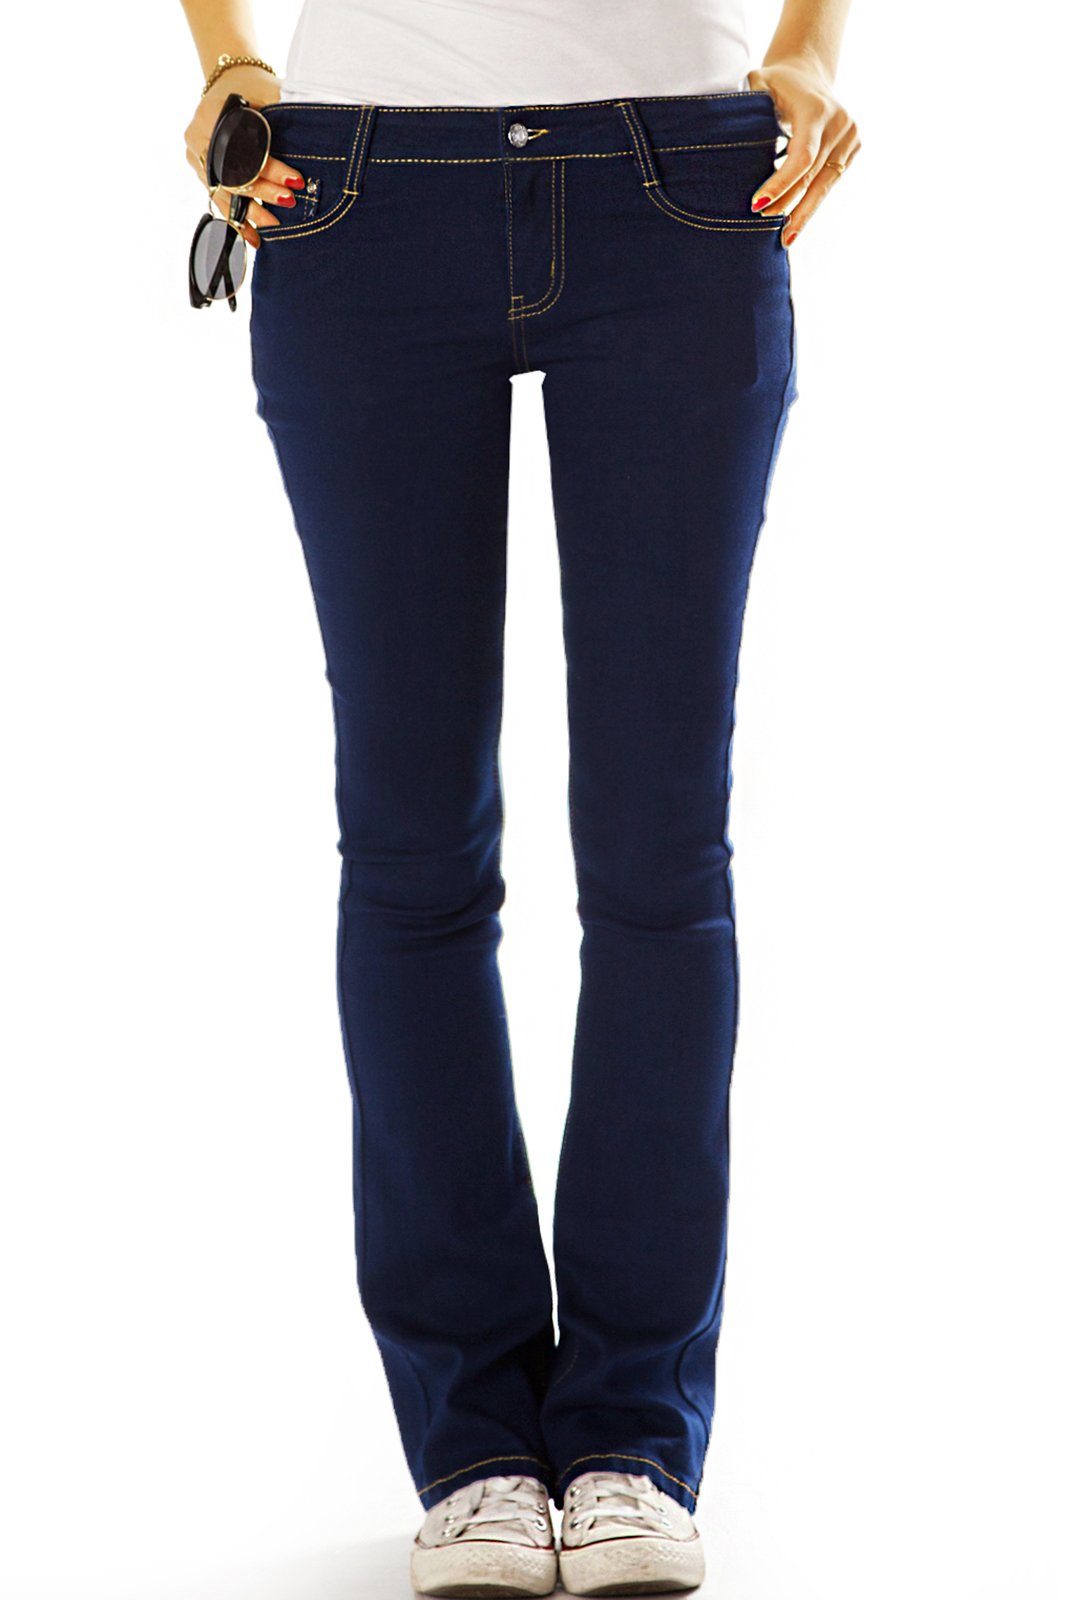 be styled Bootcut-Jeans Hüftjeans Bootcut Jeanshose Stretchjeans - Damen -j18g mit Stretch-Anteil, 5-Pocket-Style blau